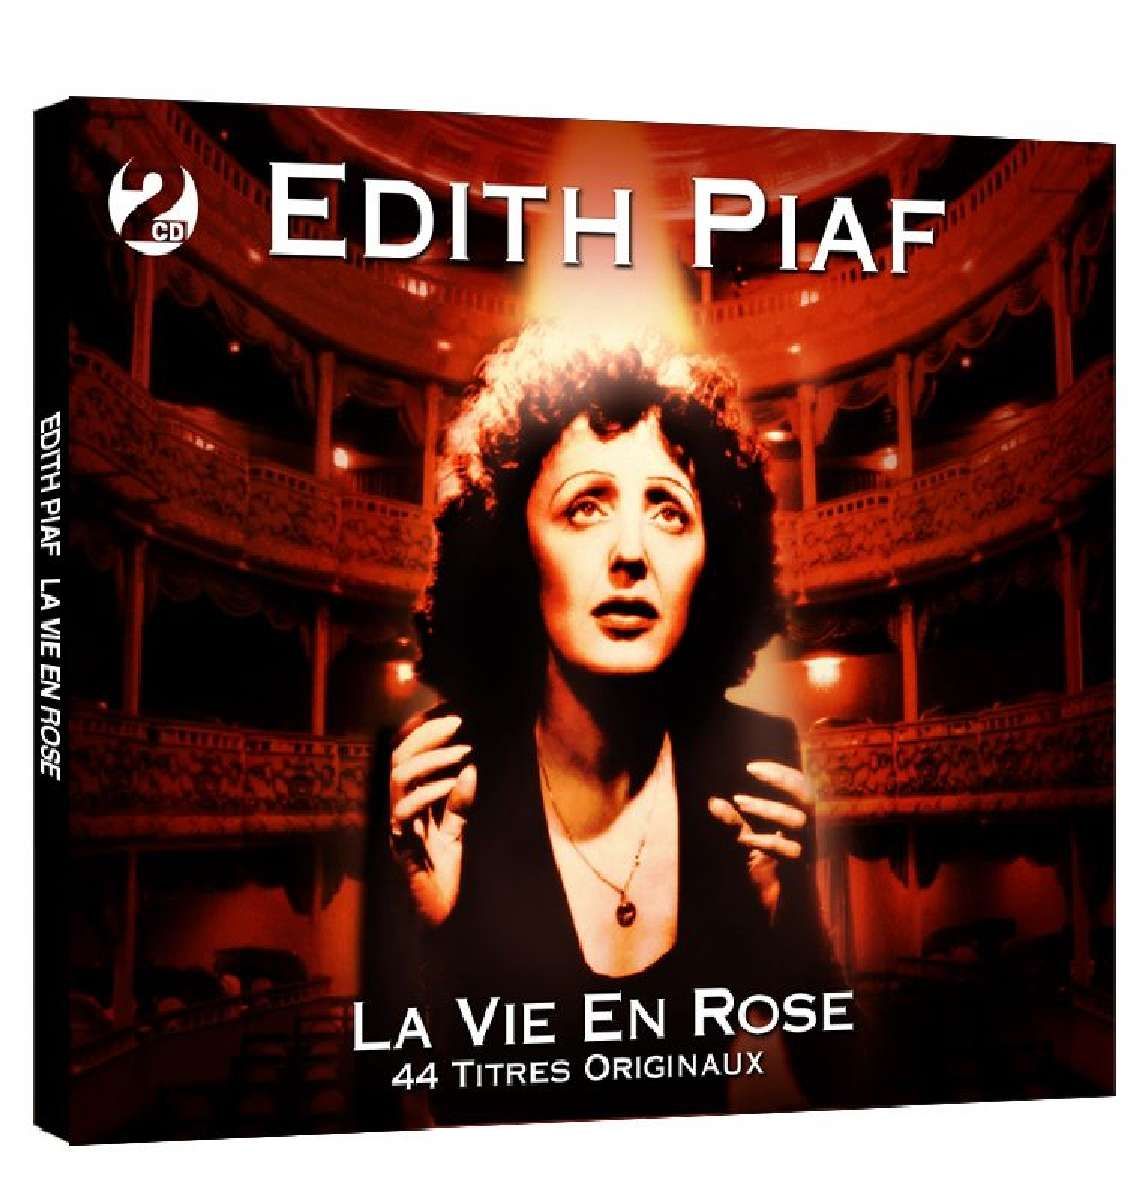 Эдит Пиаф. Эдит Пиаф рост. Эдит Пиаф la vie en Rose CD. Edith Piaf Greatest Hits (2008).